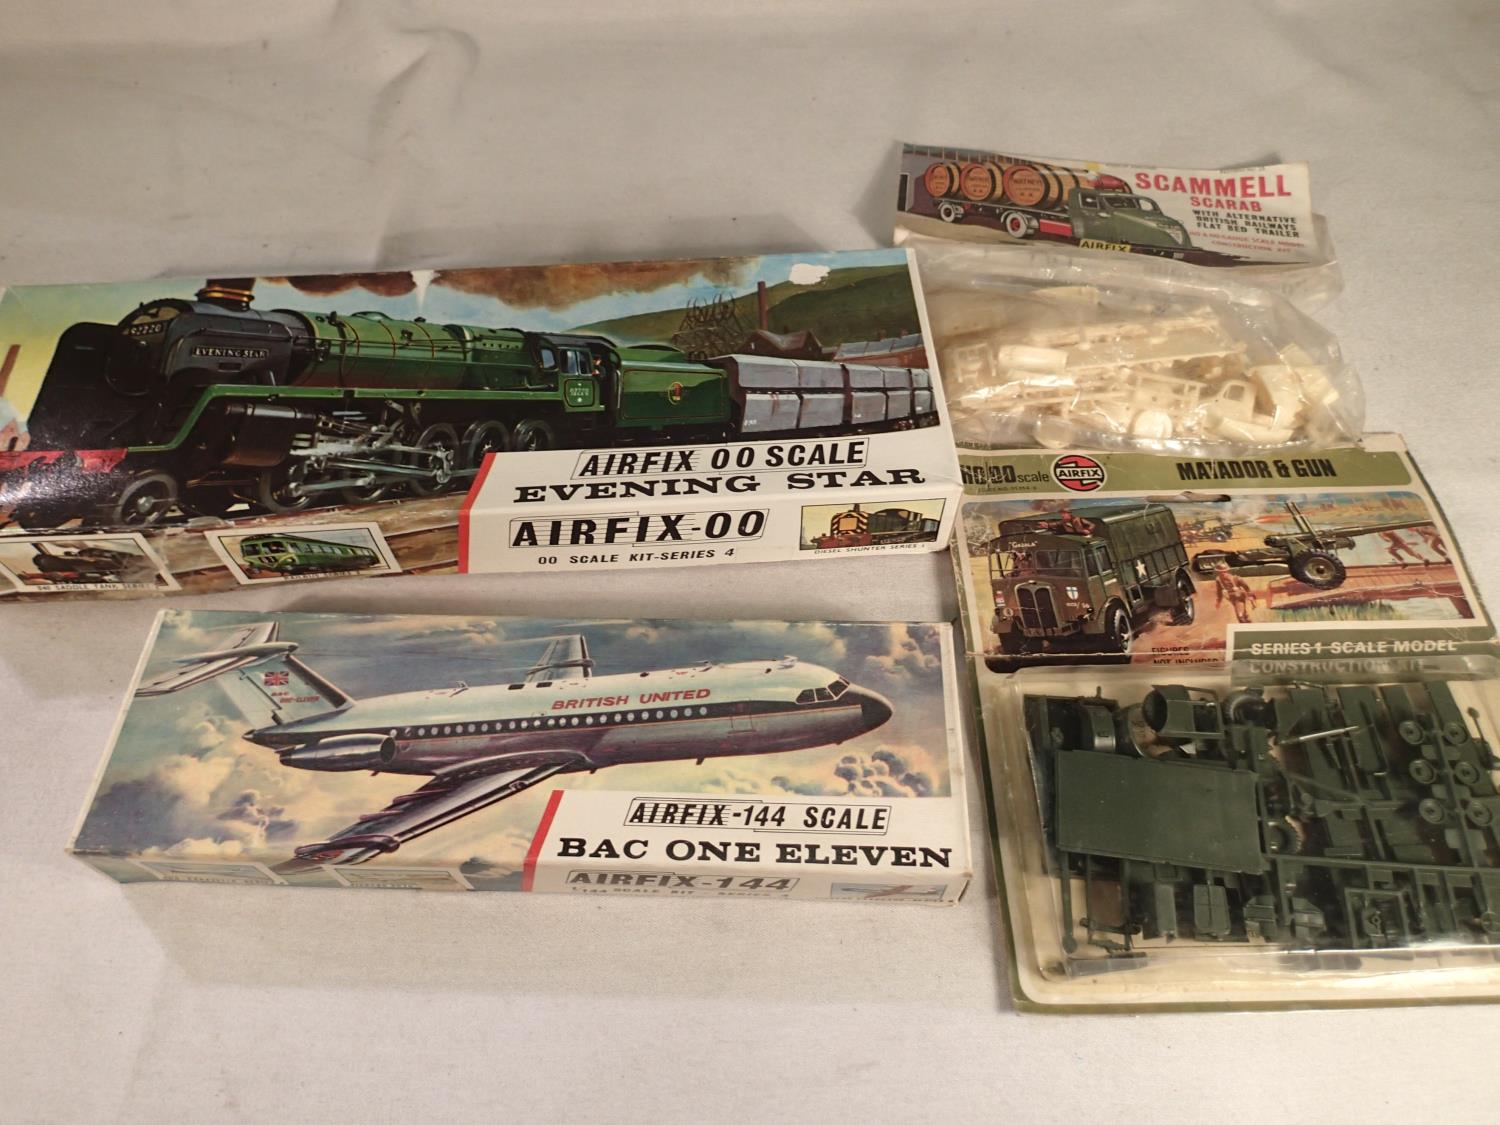 Four Airfix plastic kits, 1/144 scale B.A.C One Eleven, 1/72 scale Matador and Gun, 1/72 scale